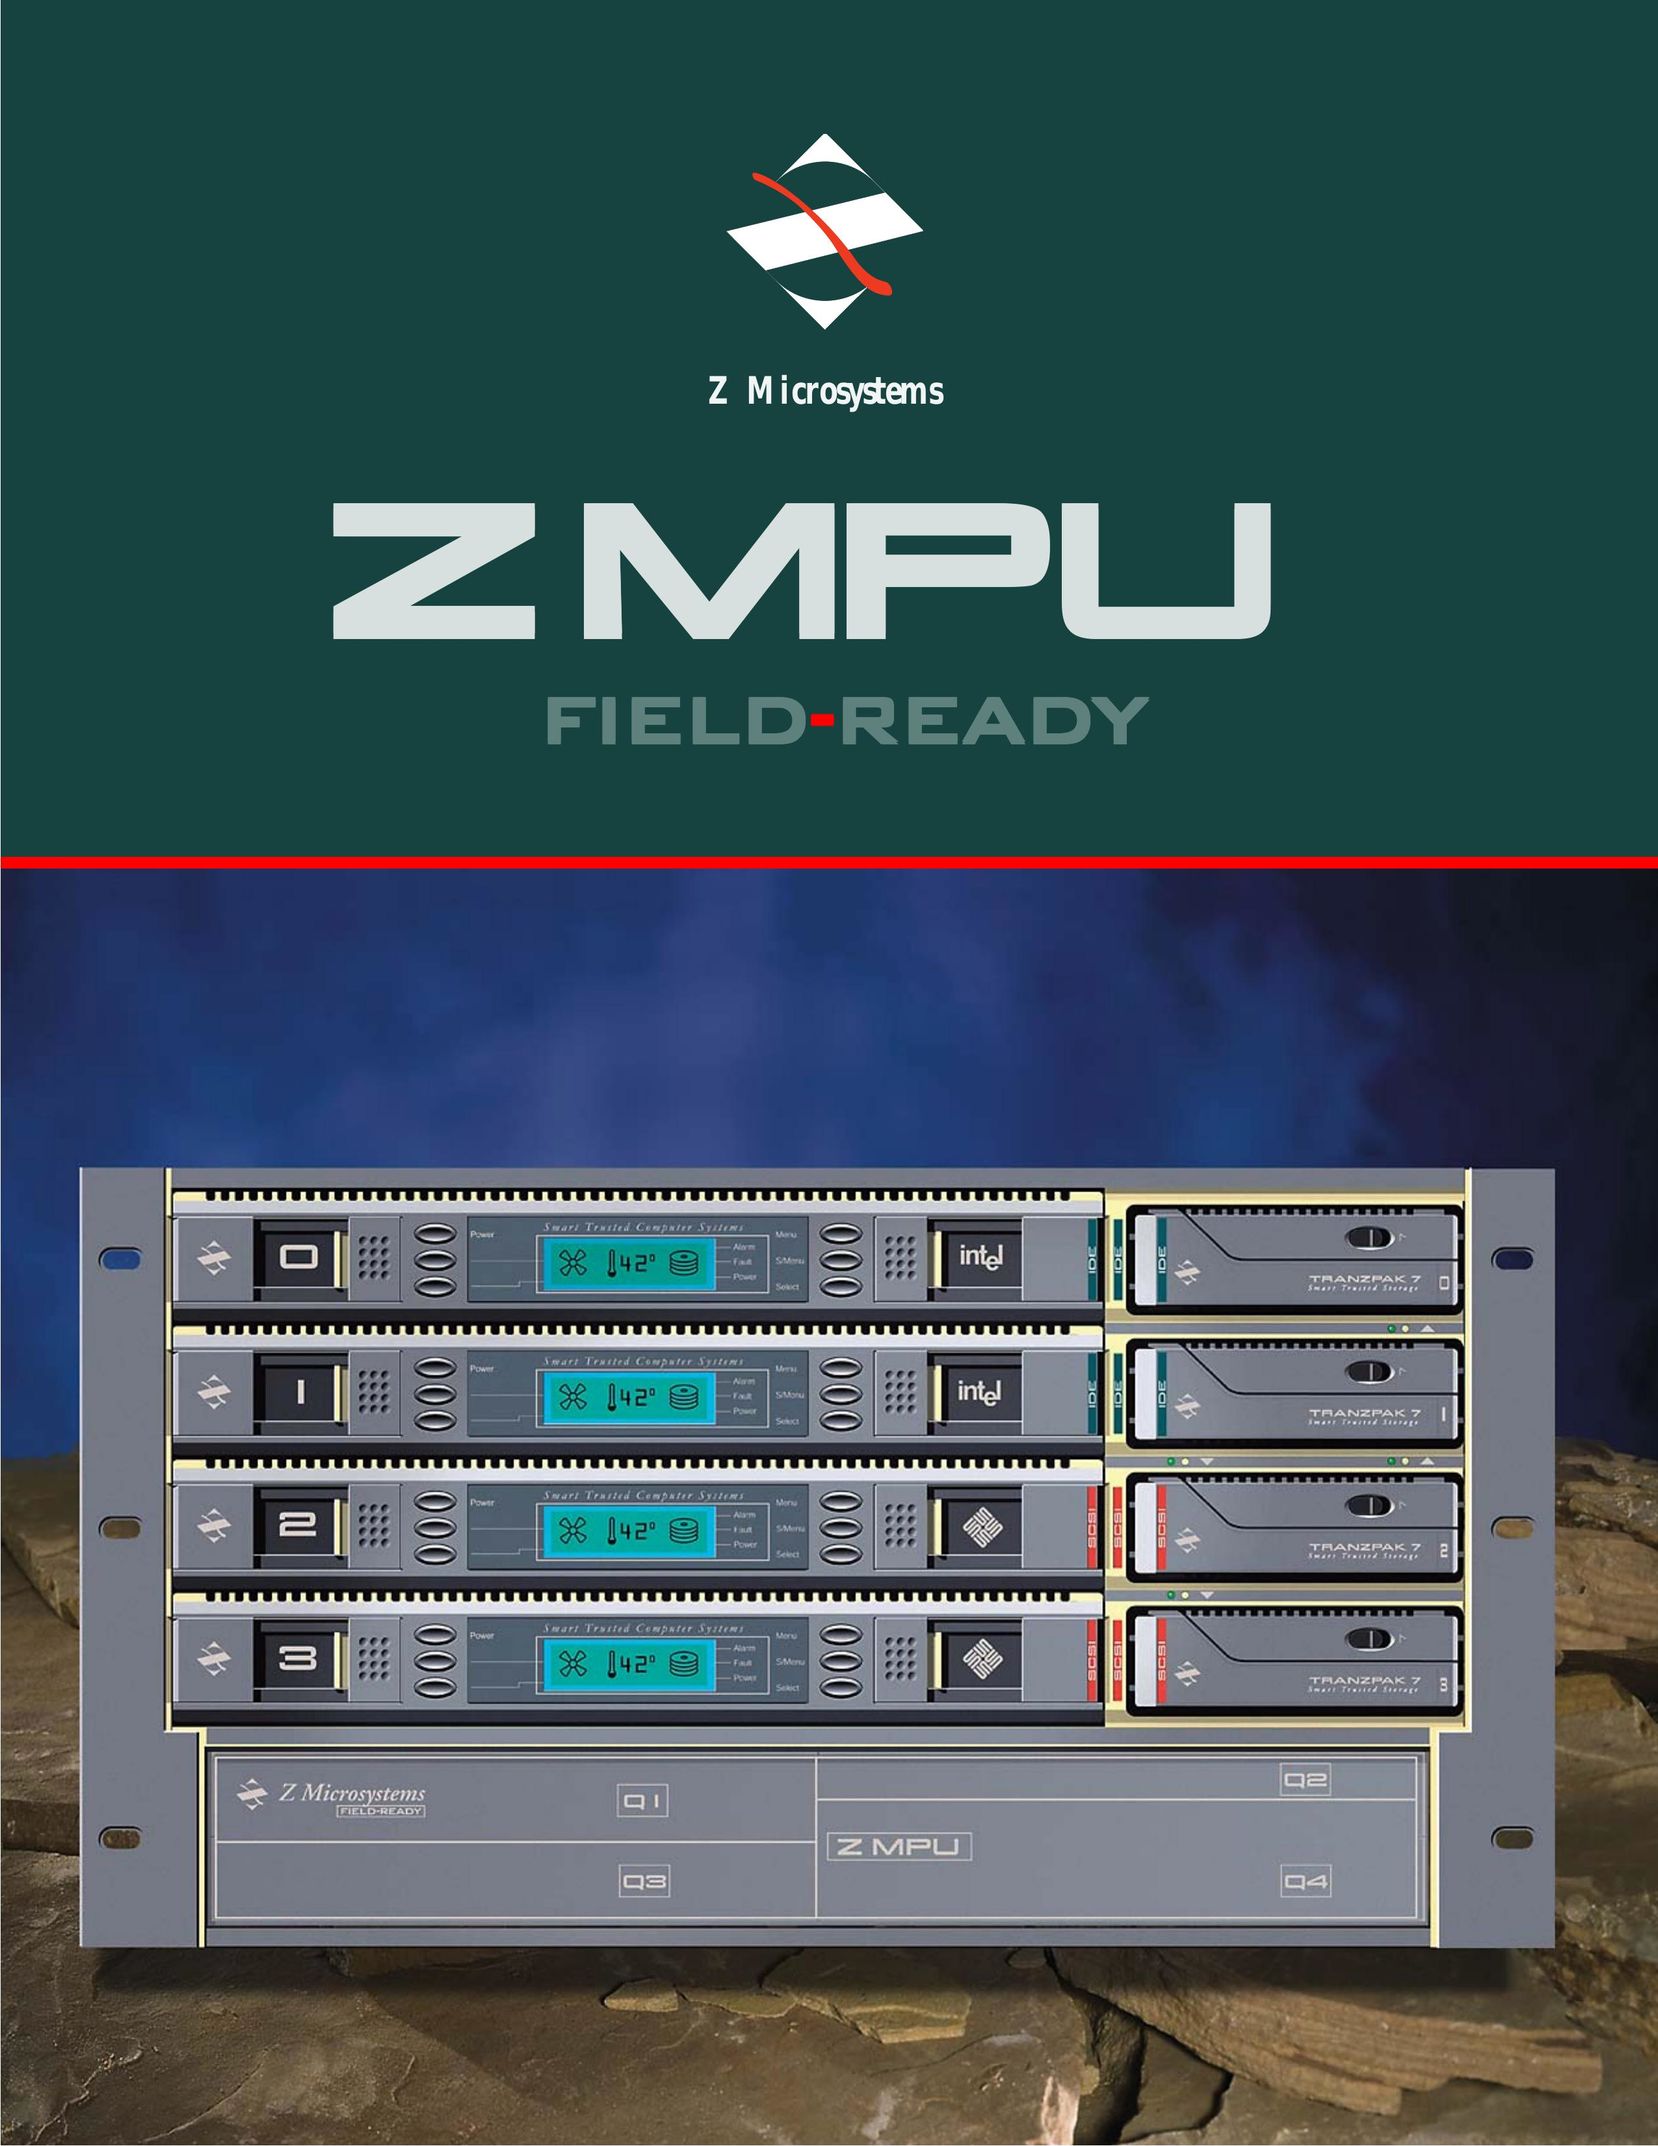 Z Microsystems Z MPU Network Card User Manual